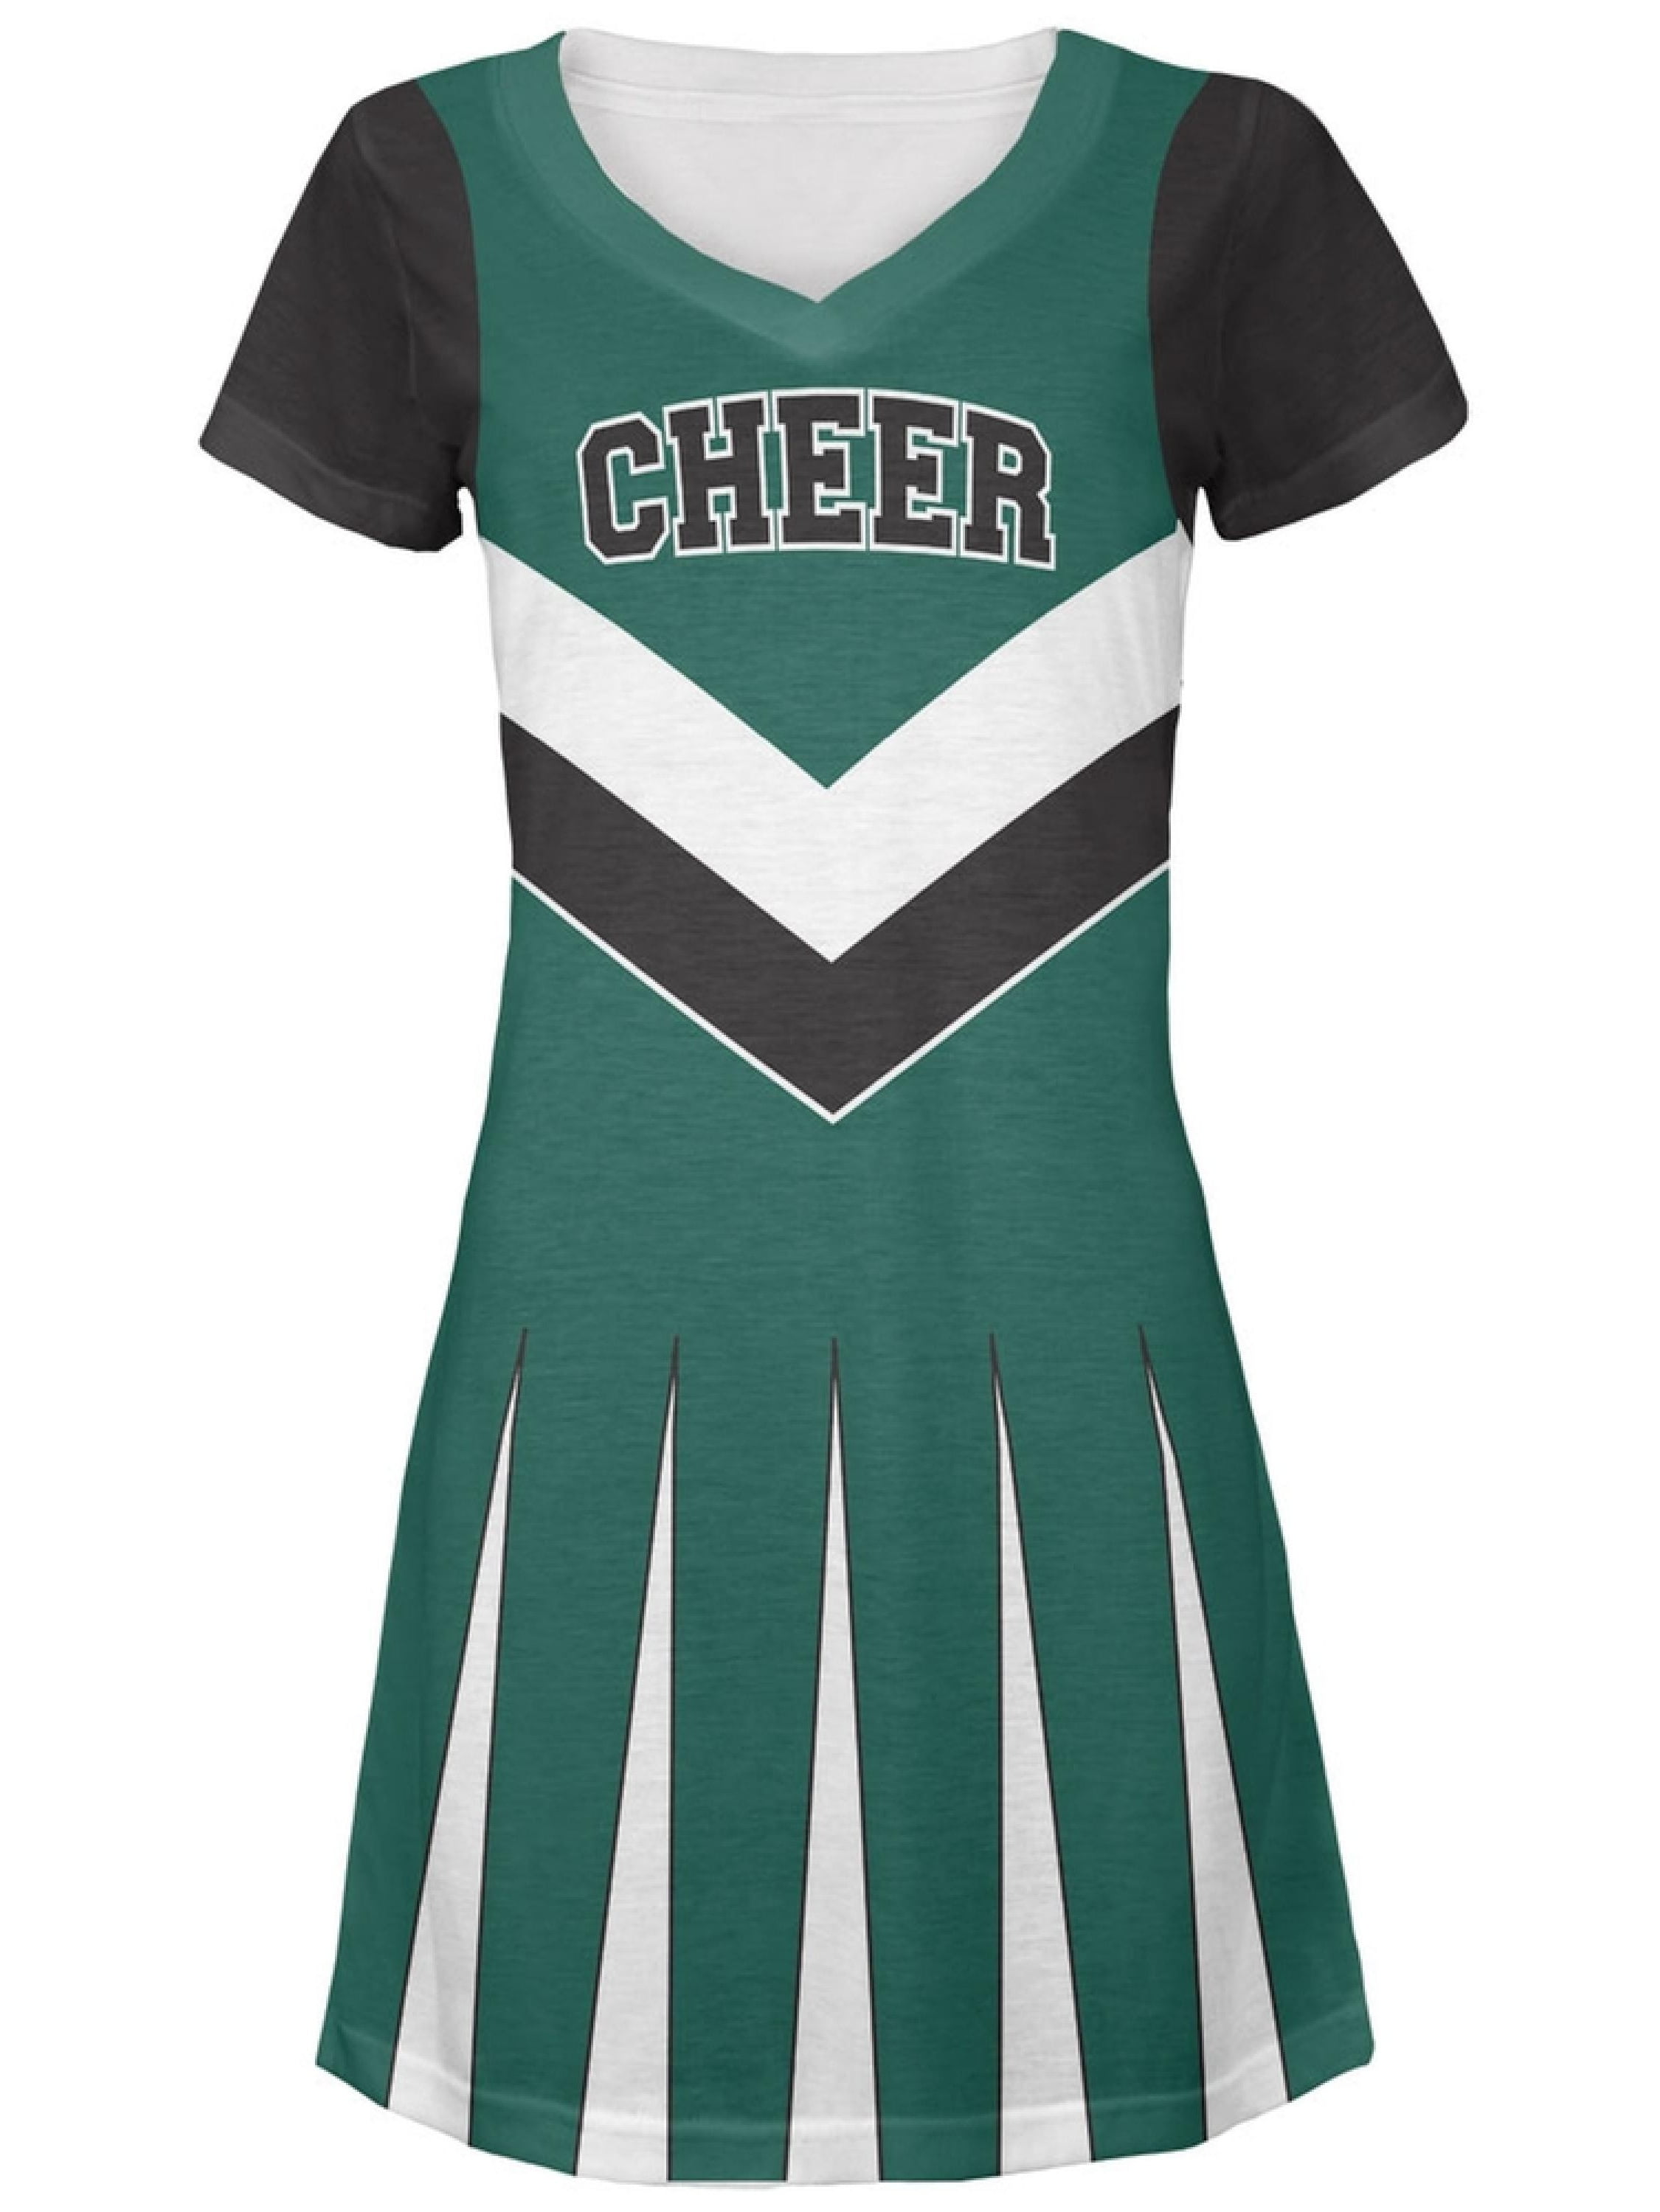 Child COLTS Cheerleader Uniform Outfit Costume Top Skirt Yth Medium Green Black 